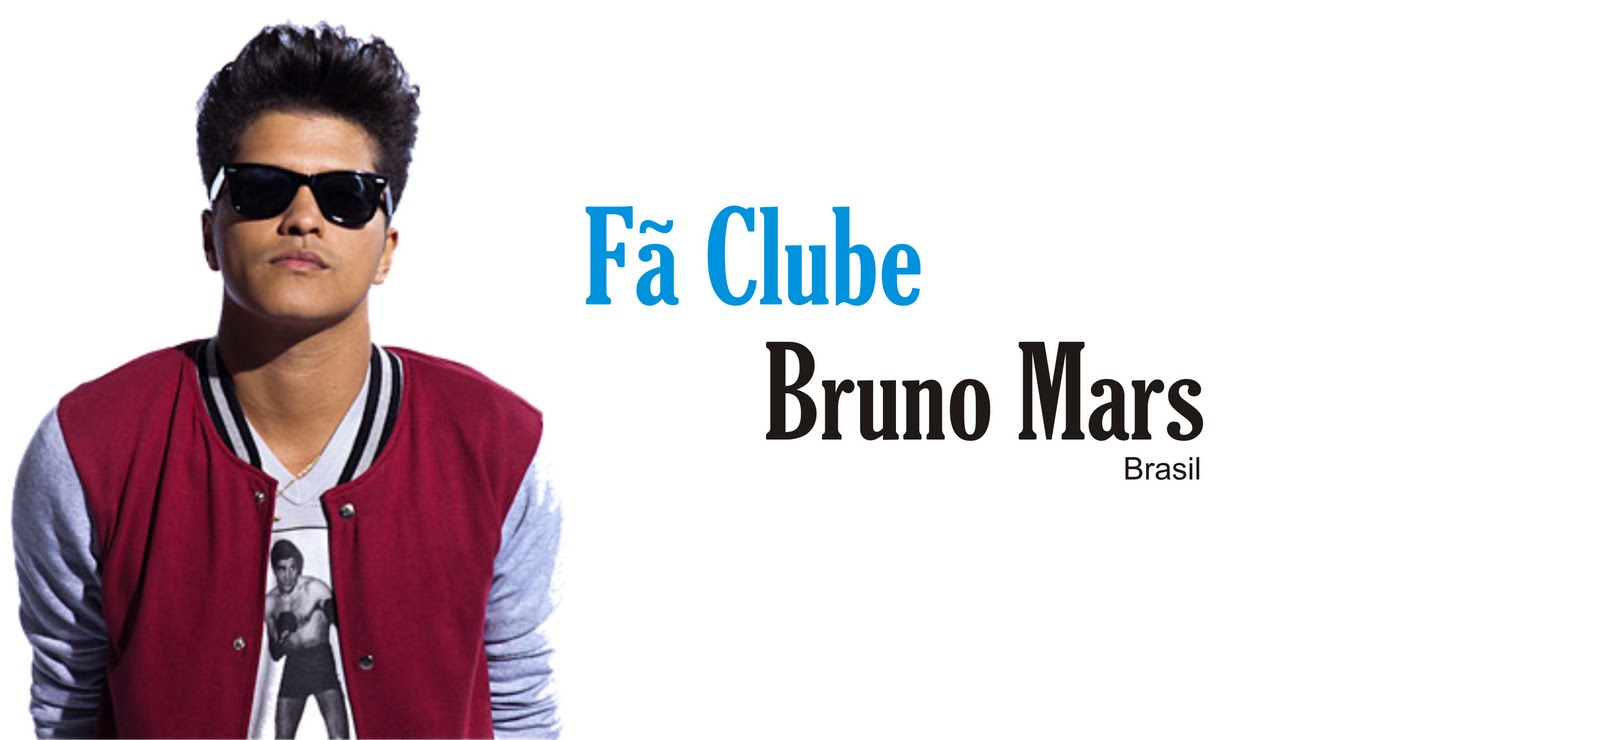 Fã Clube Bruno Mars Oficial